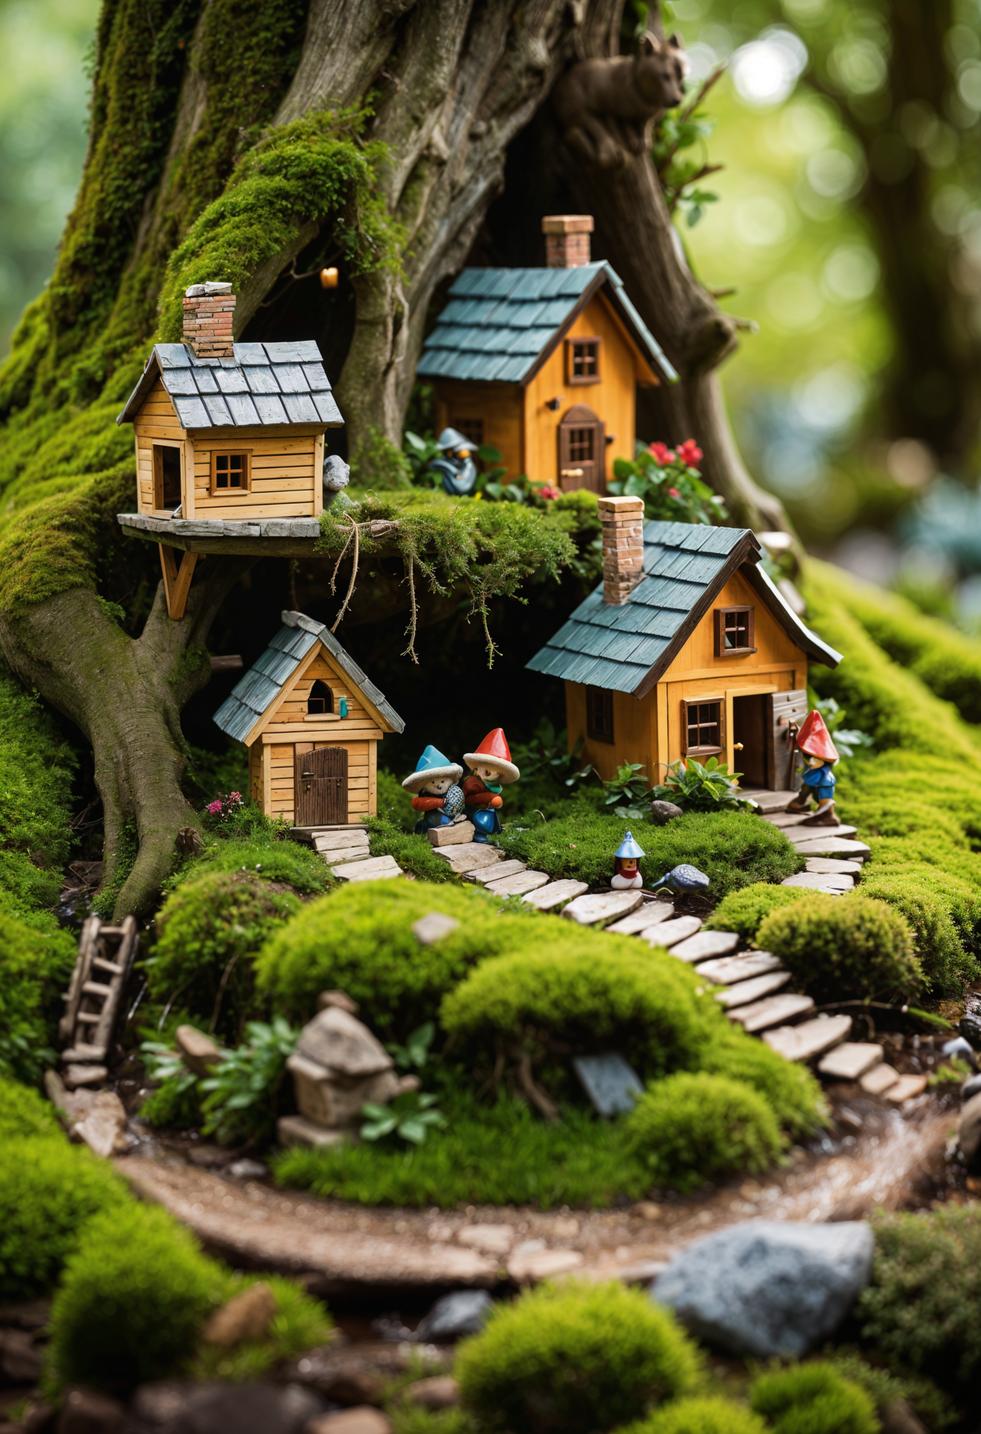 3. Enchanted Gnome Village-1